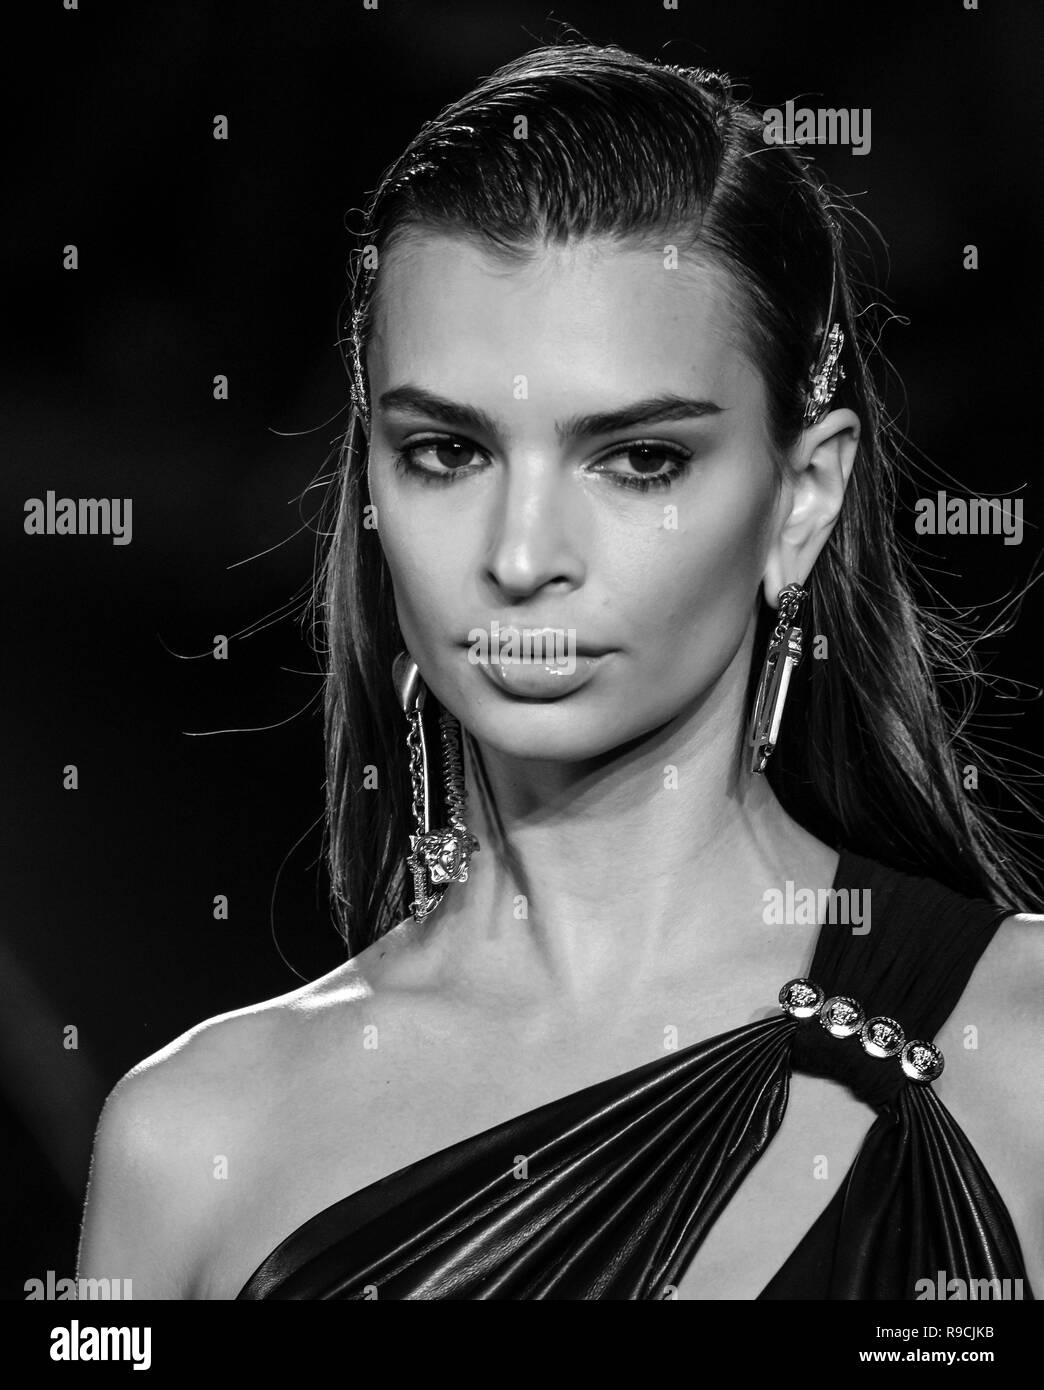 Emily ratajkowski model Black and White Stock Photos & Images - Alamy